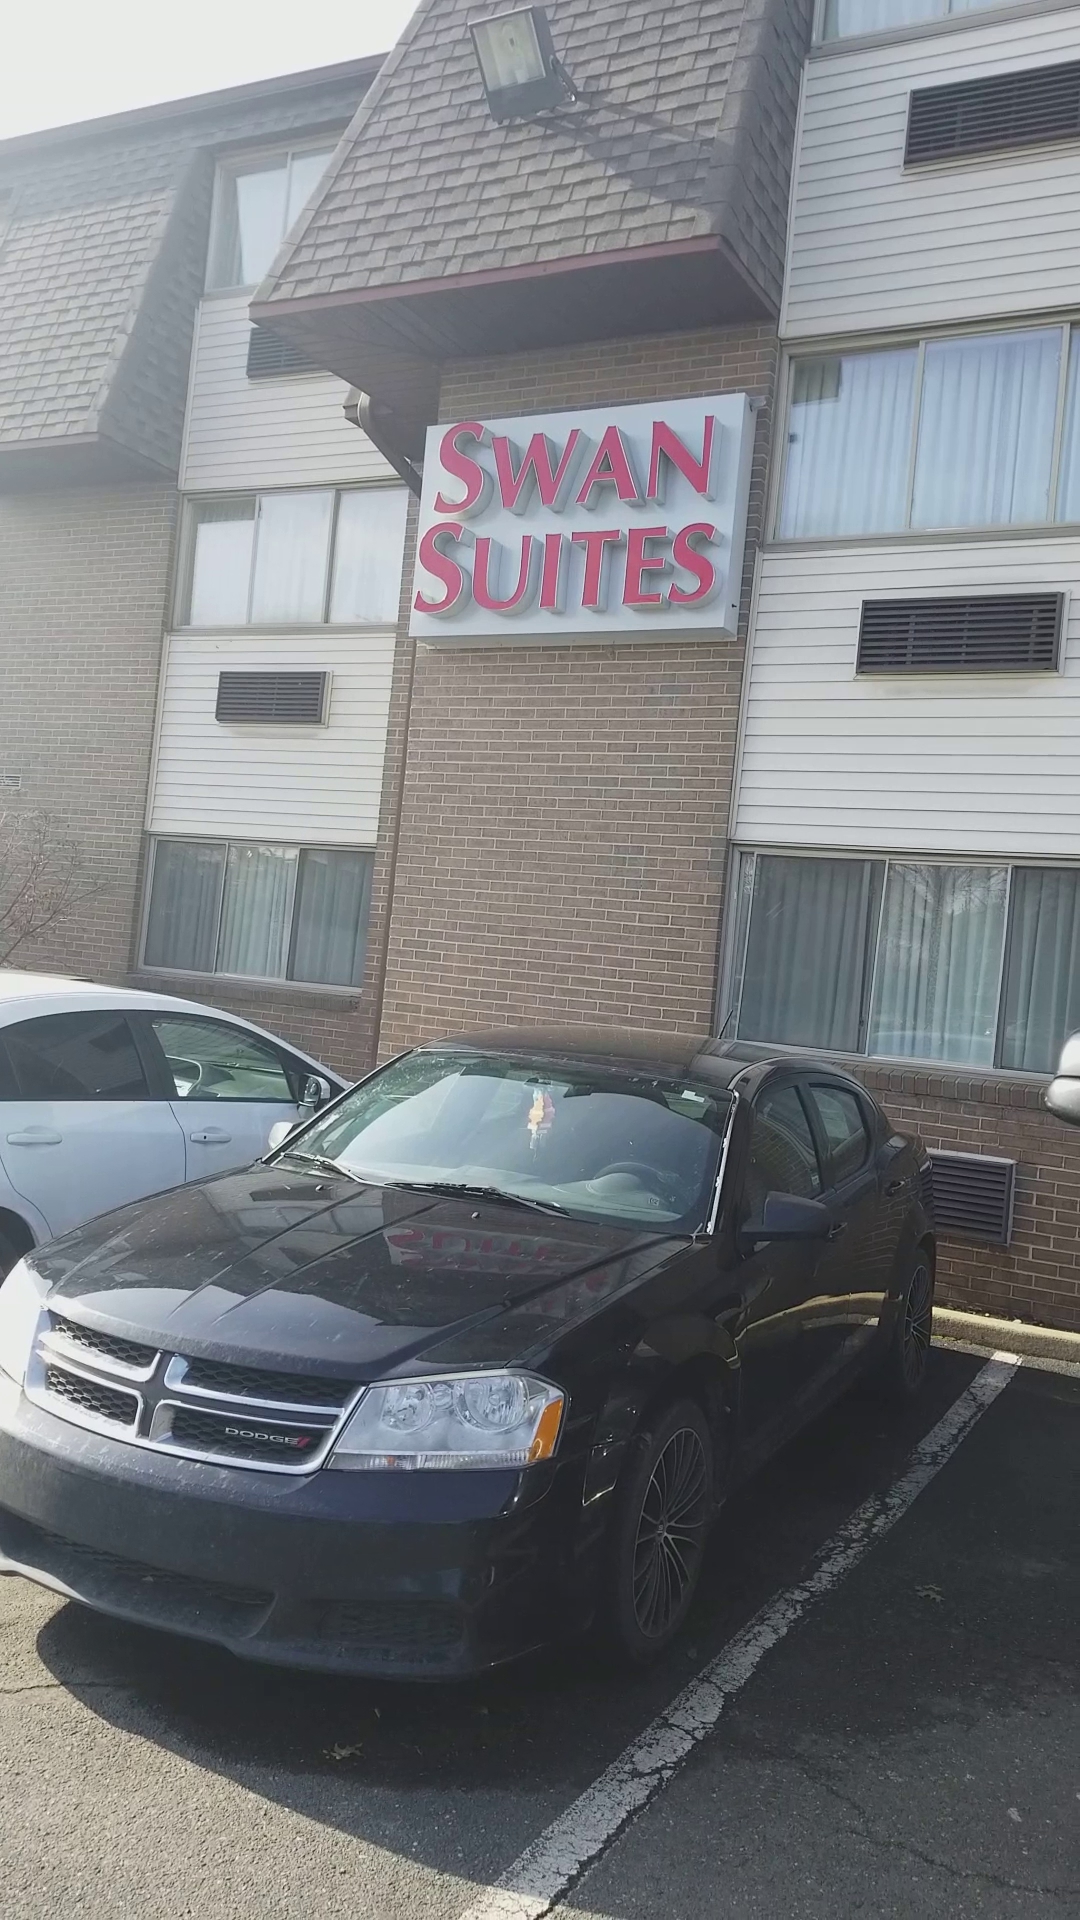 Swan Motel